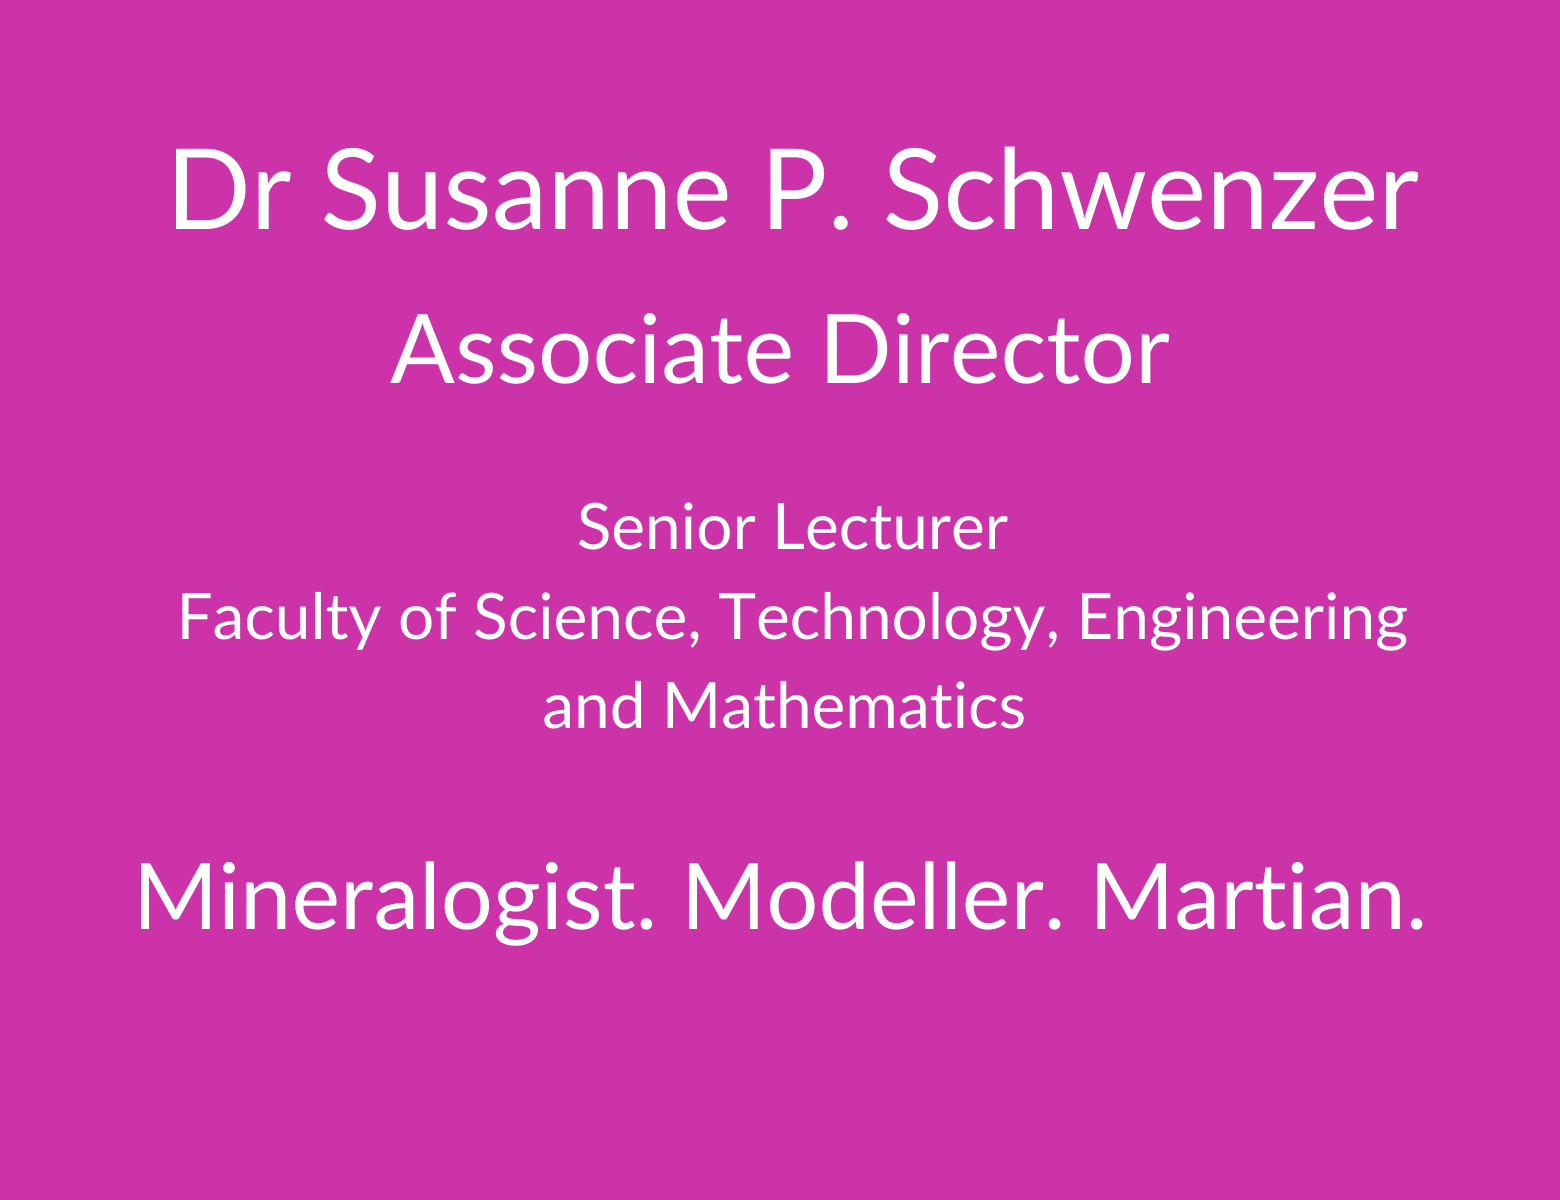 Dr Susanne P. Schwenzer. Associate Director. Senior Lecturer. Faculty of Science. Technology, Engineering and Mathematics. Mineralogist, Modeller. Martian 